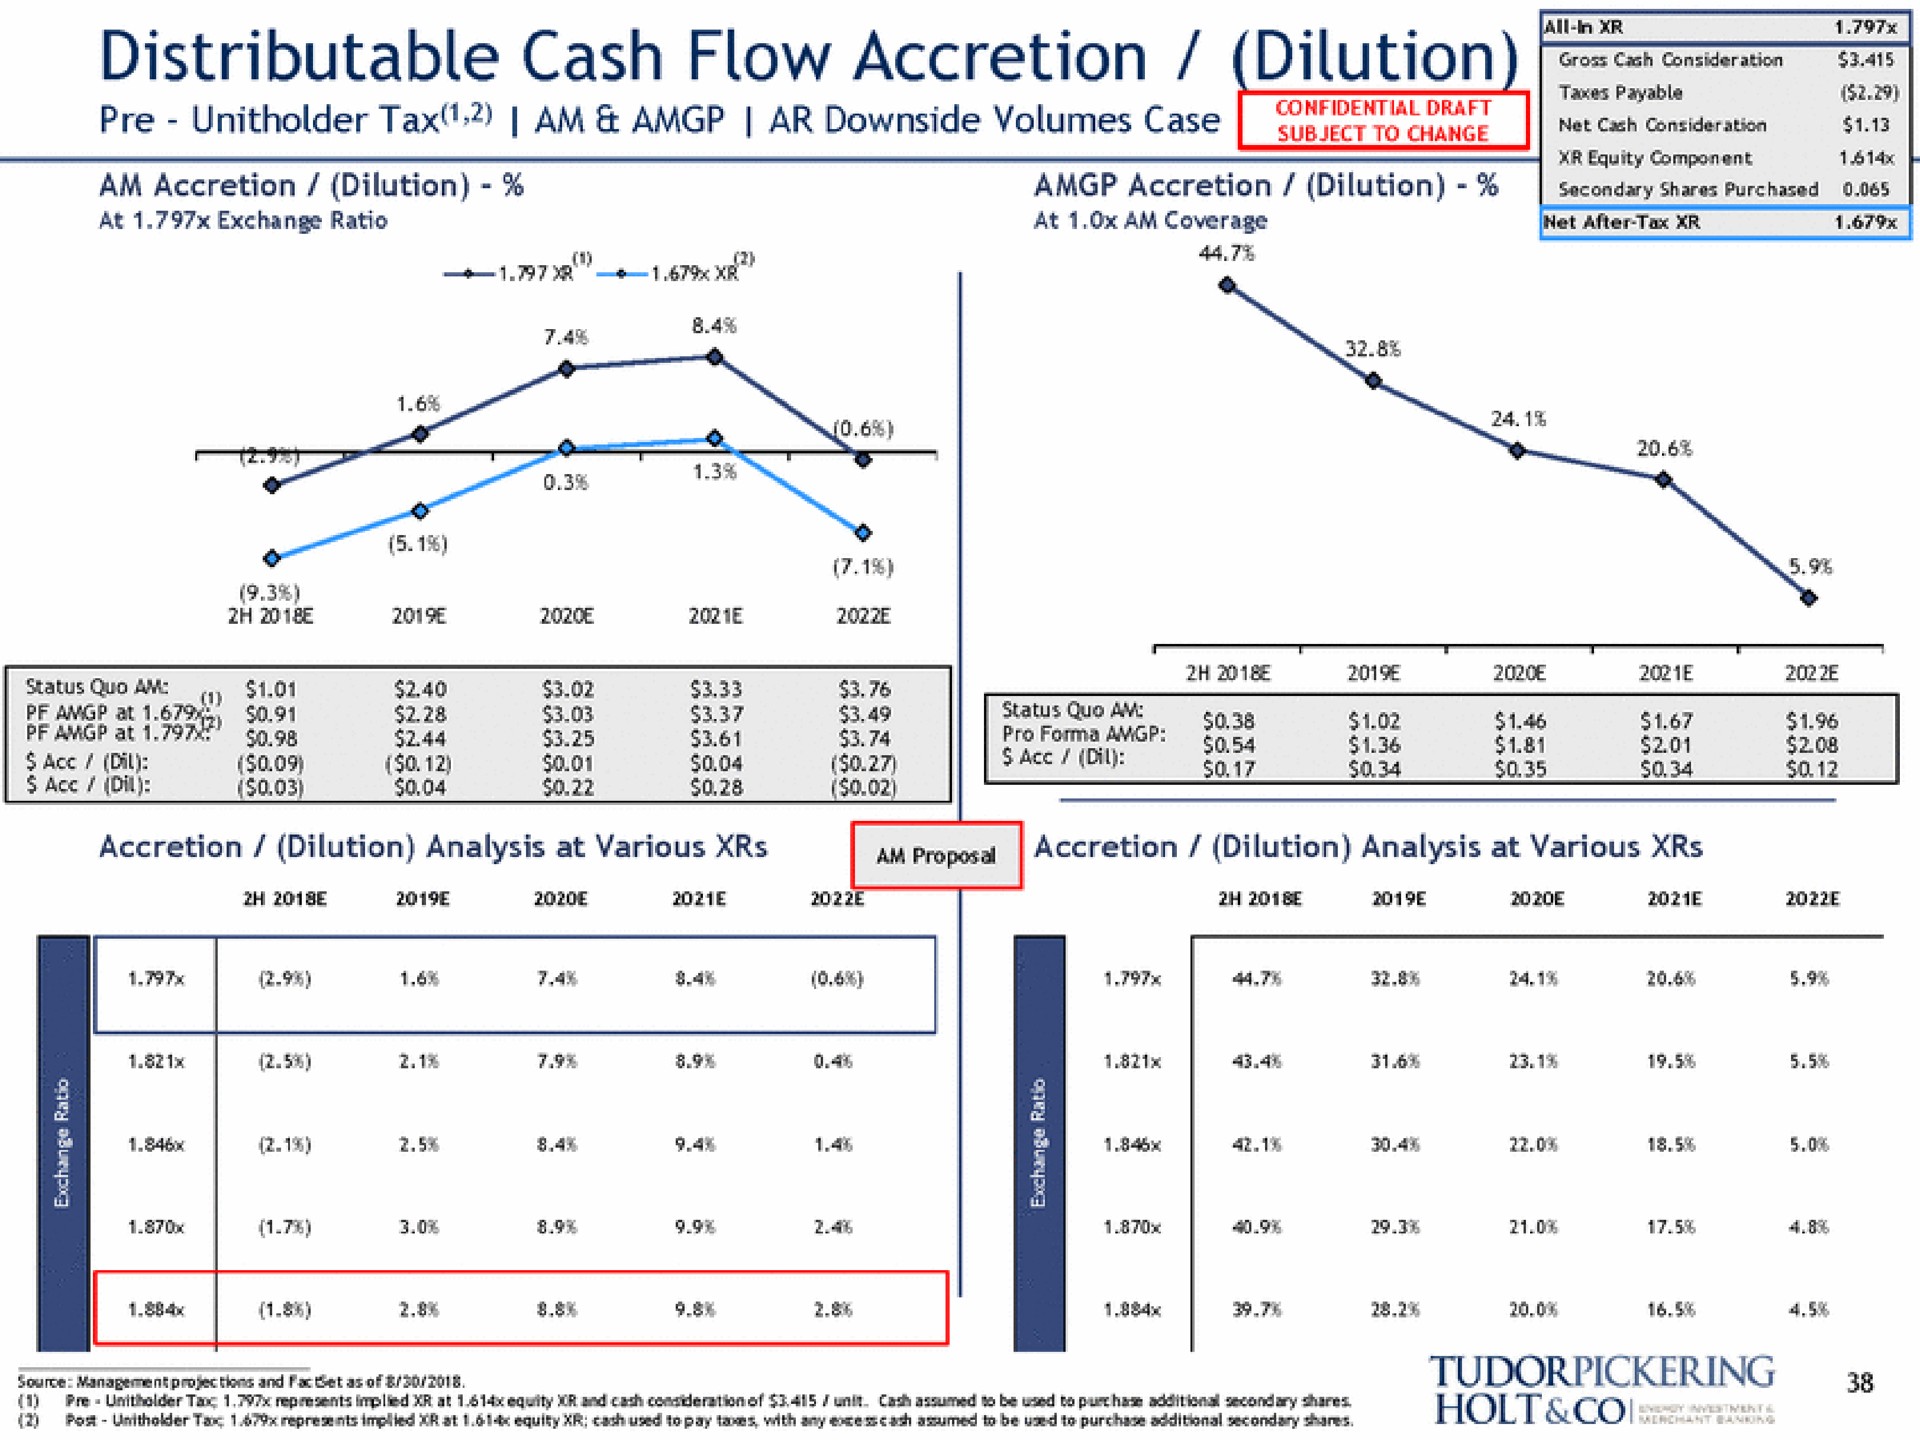 distributable cash flow accretion sera dilution | Tudor, Pickering, Holt & Co